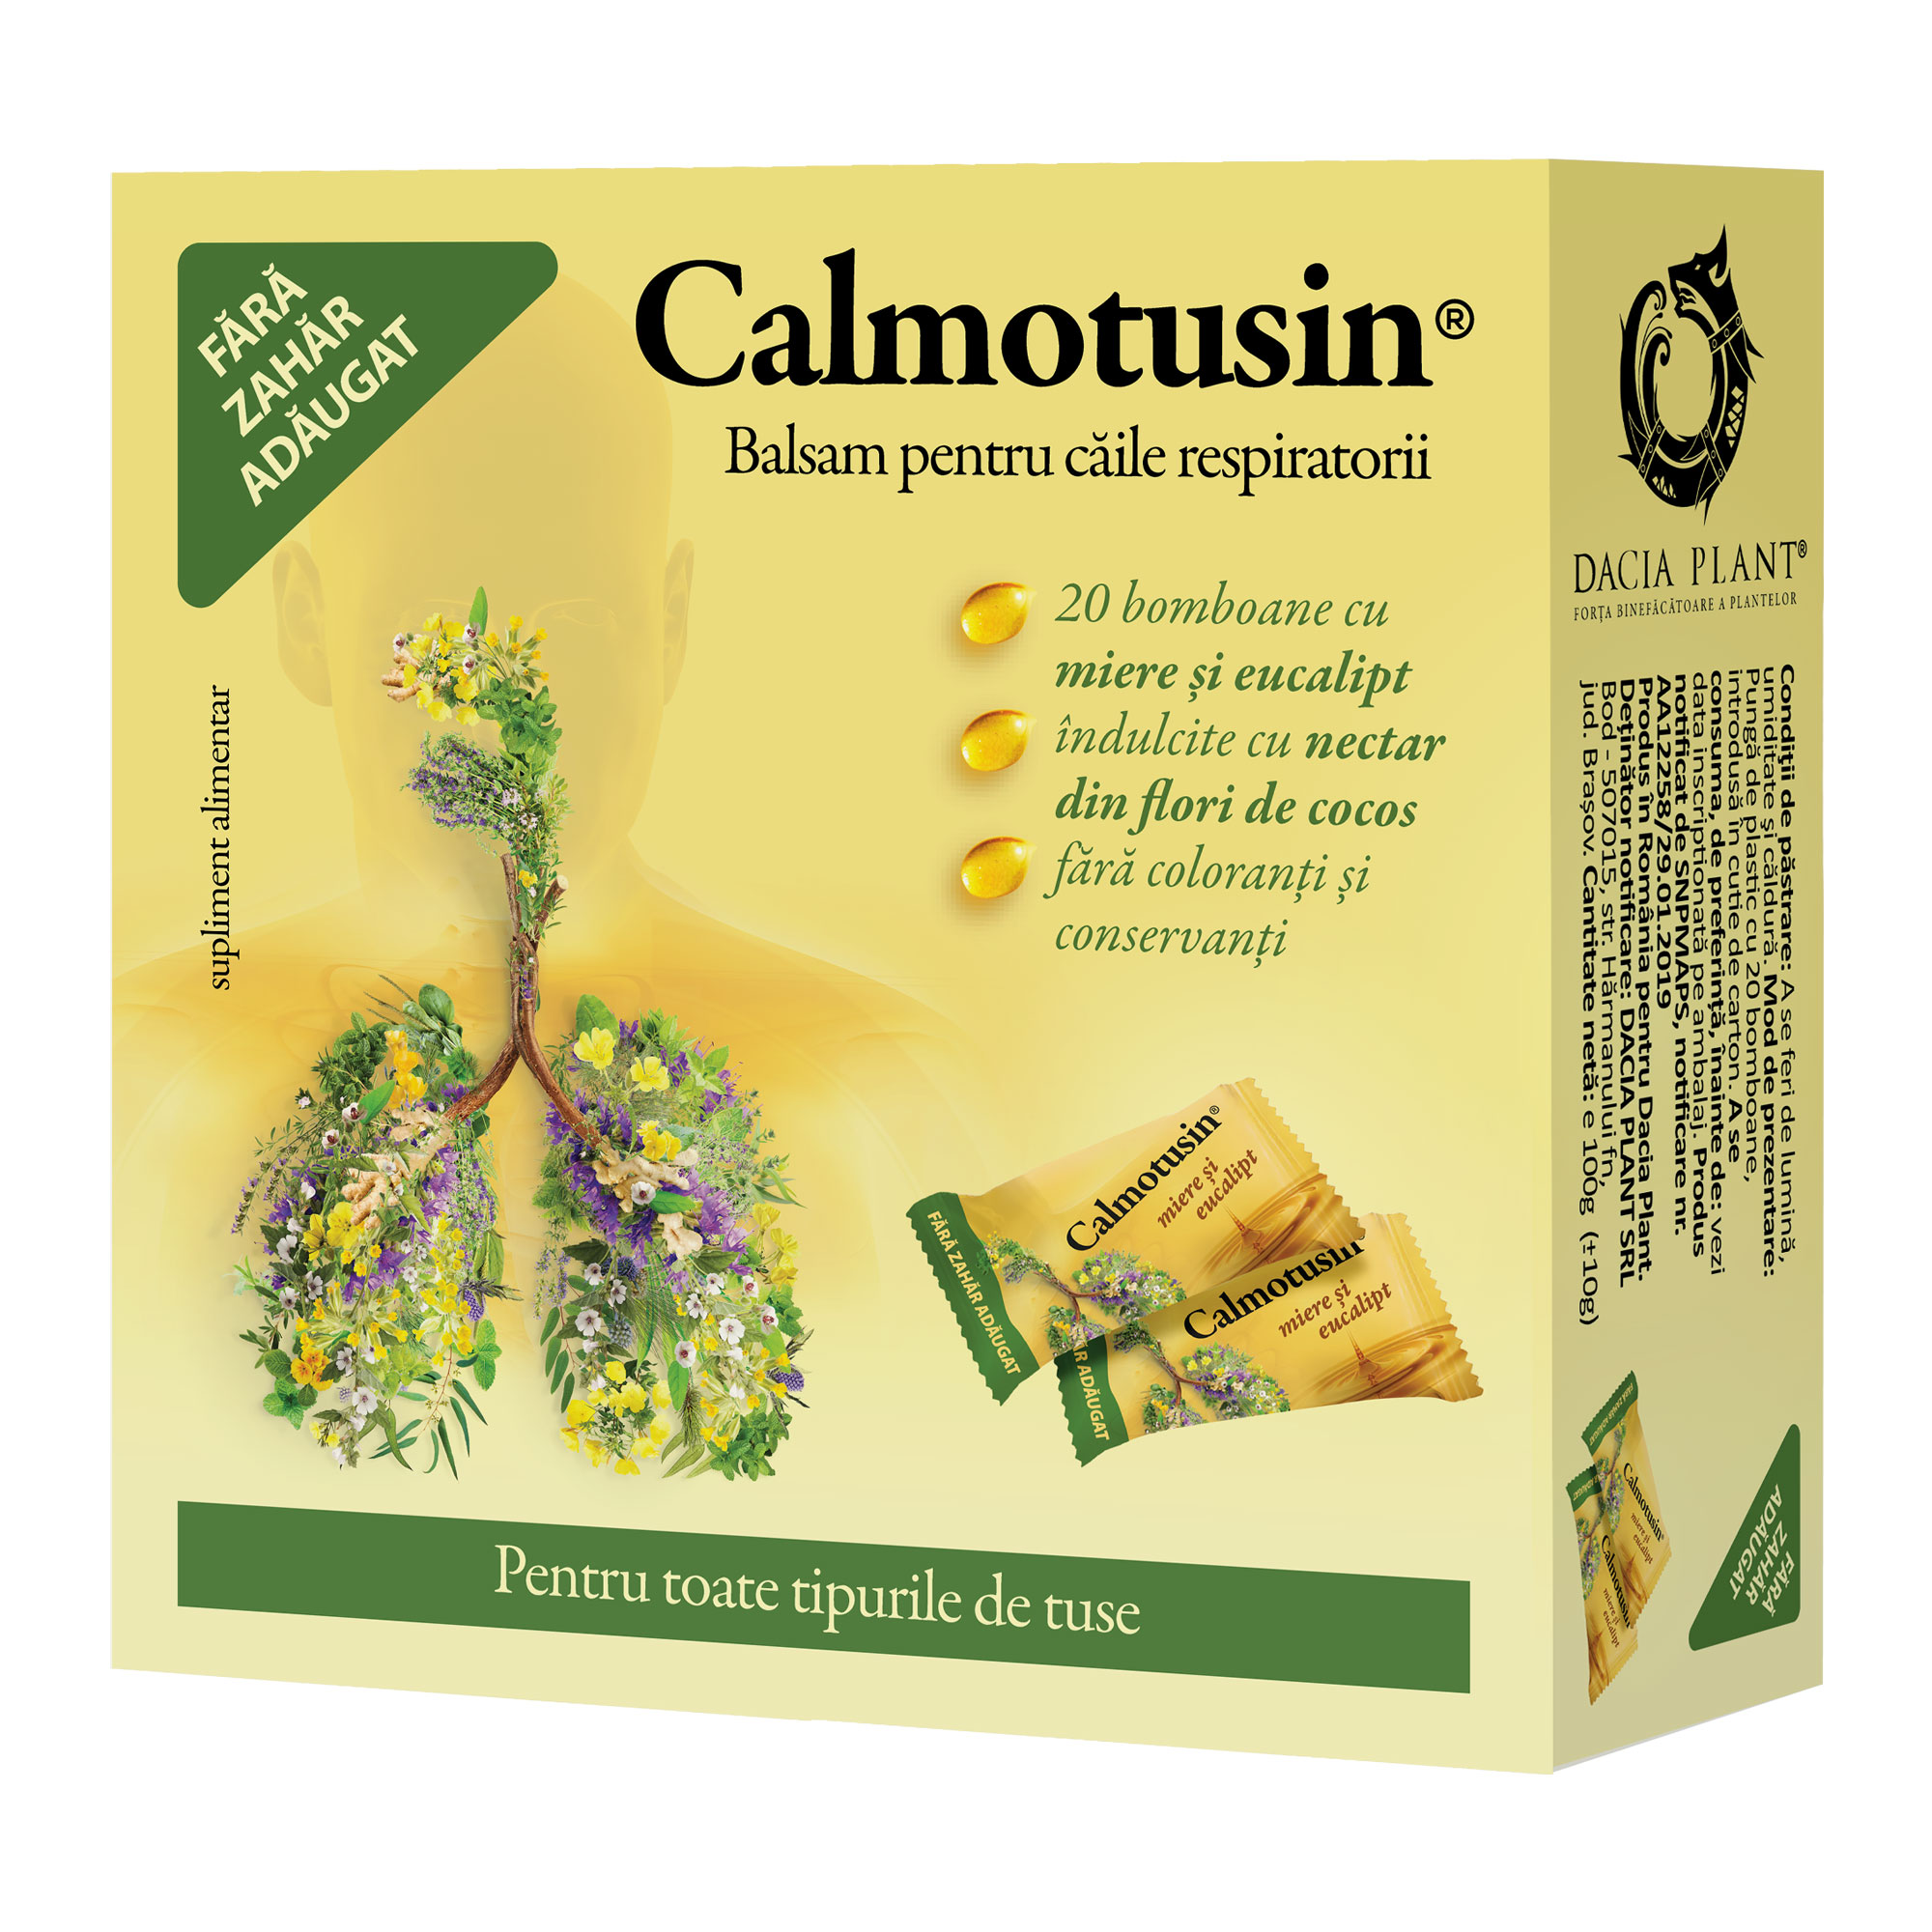 Dureri de gat - Calmotusin cu miere și eucalipt, 20 dropsuri, Dacia Plant, sinapis.ro